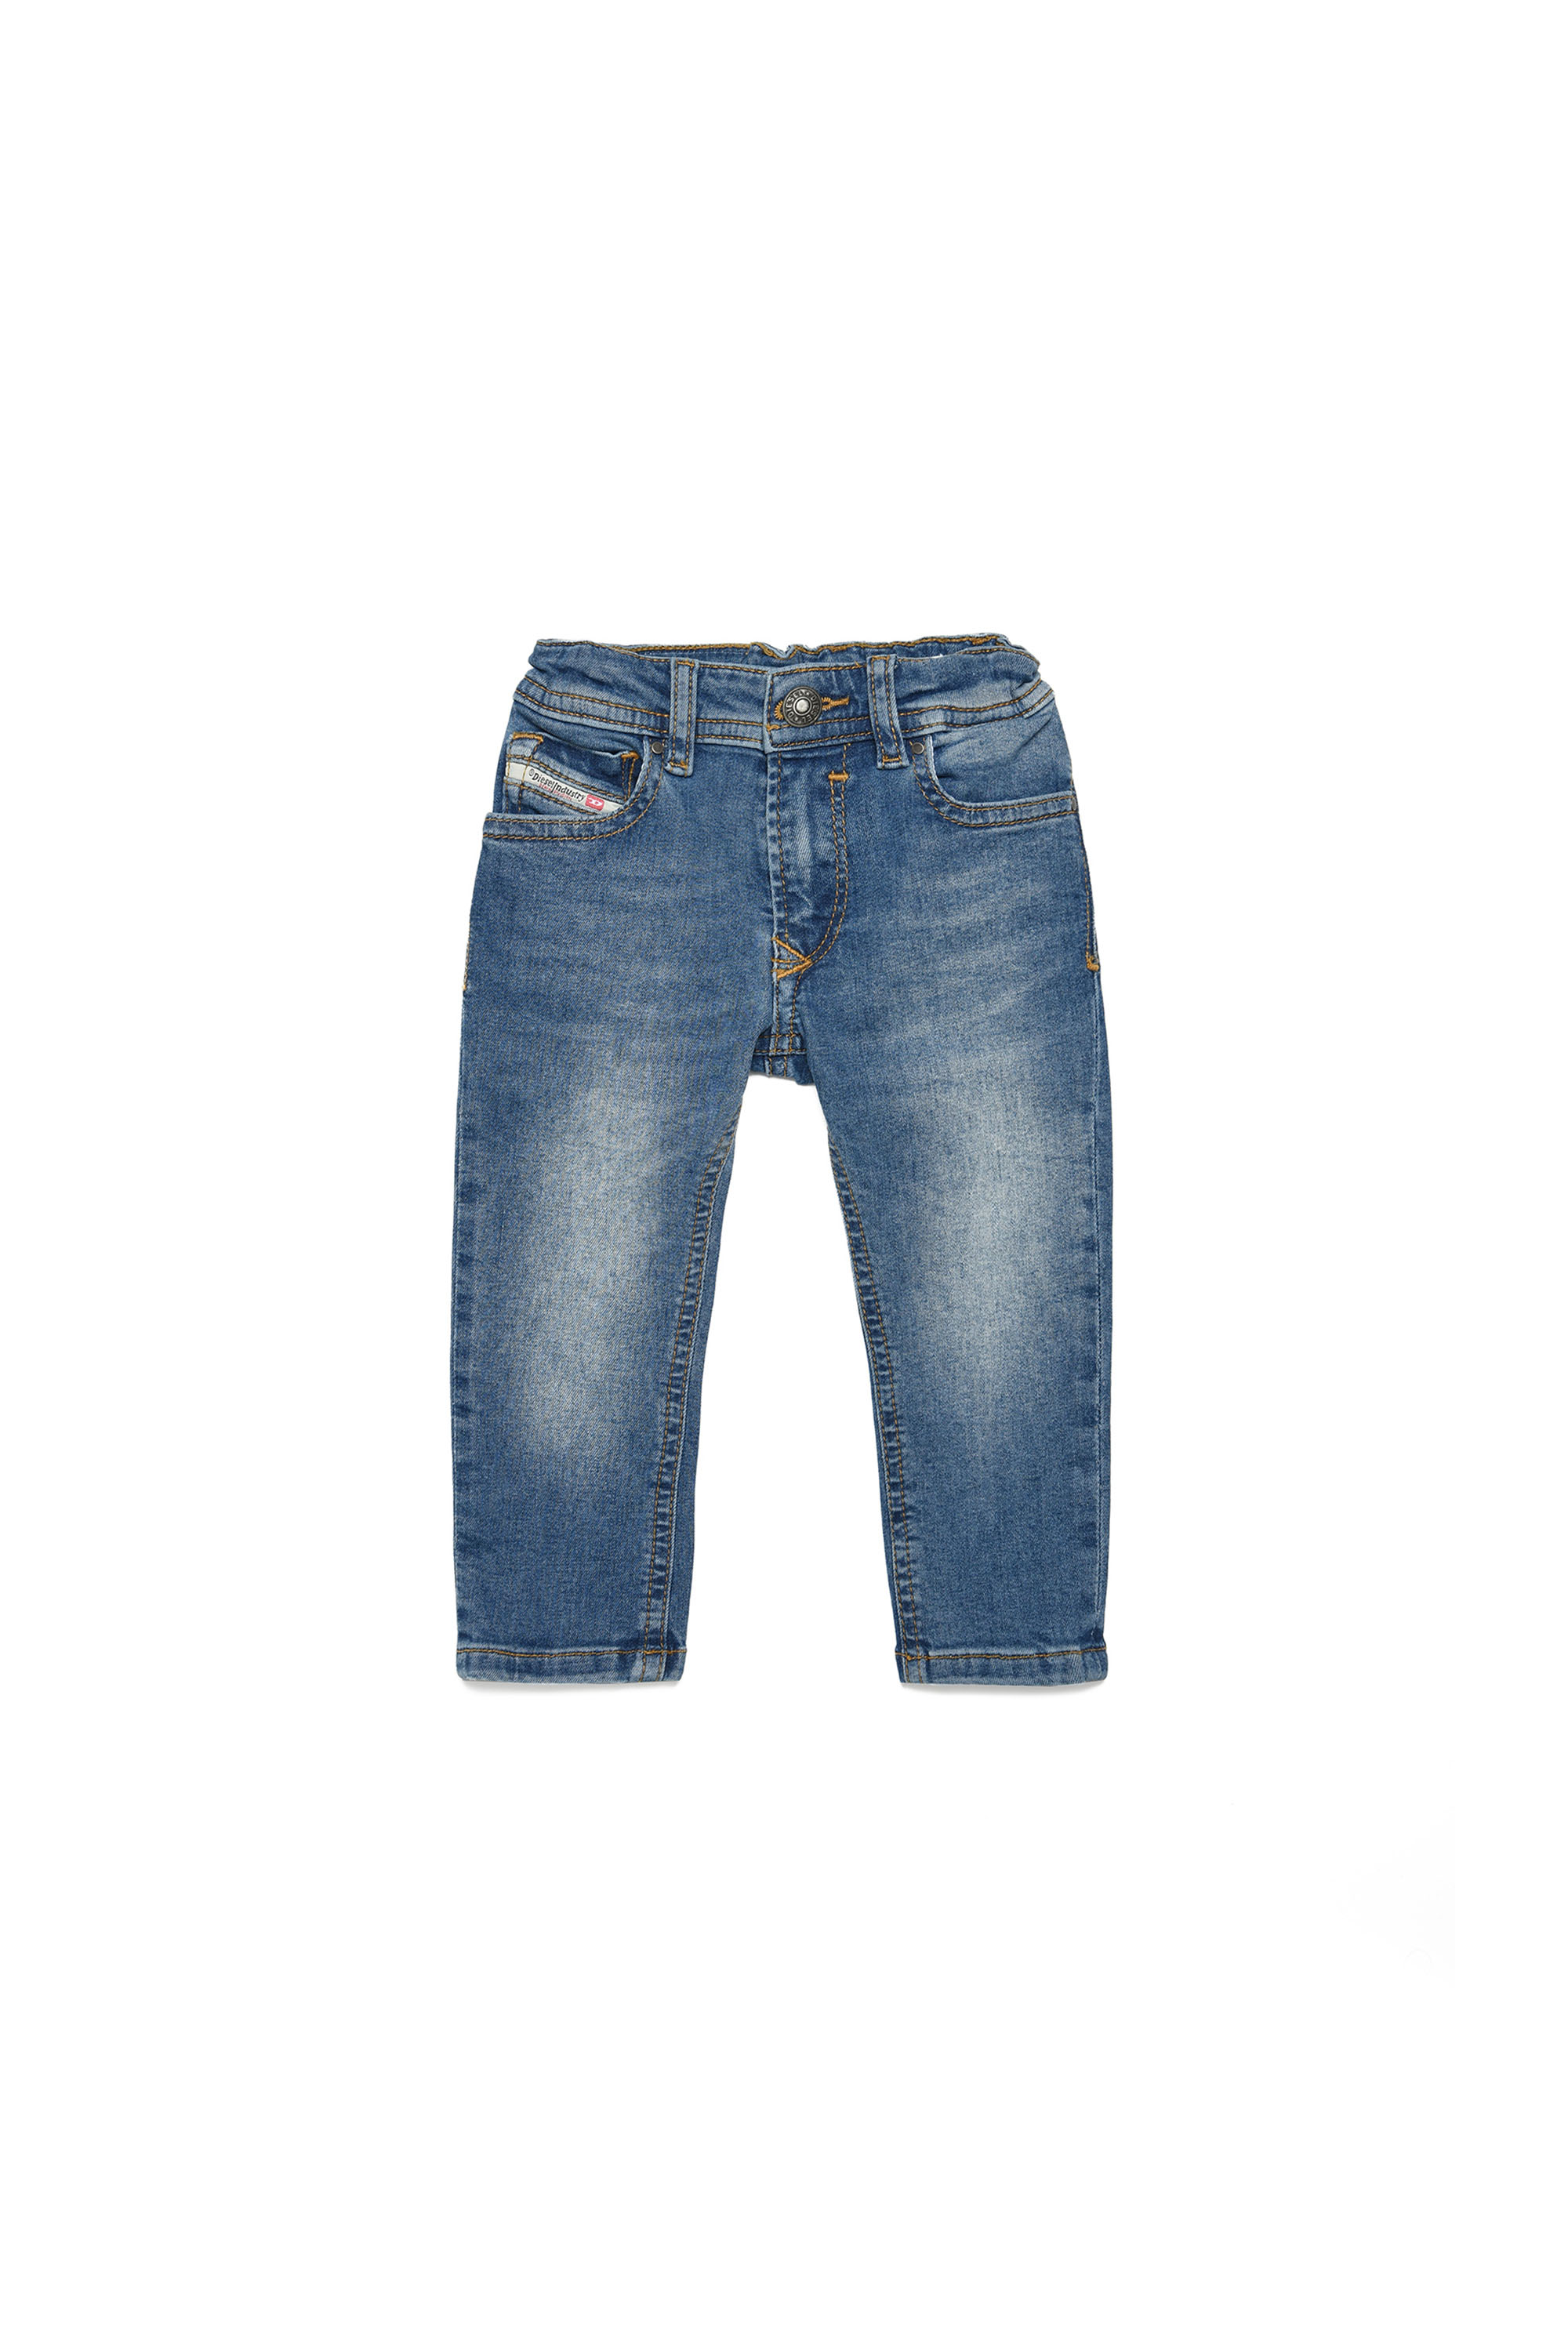 Teidem Little Boy Star Jeans Pantaloni Pantaloni Slittamento Blu giovani BABY TG 68,74,80,86 